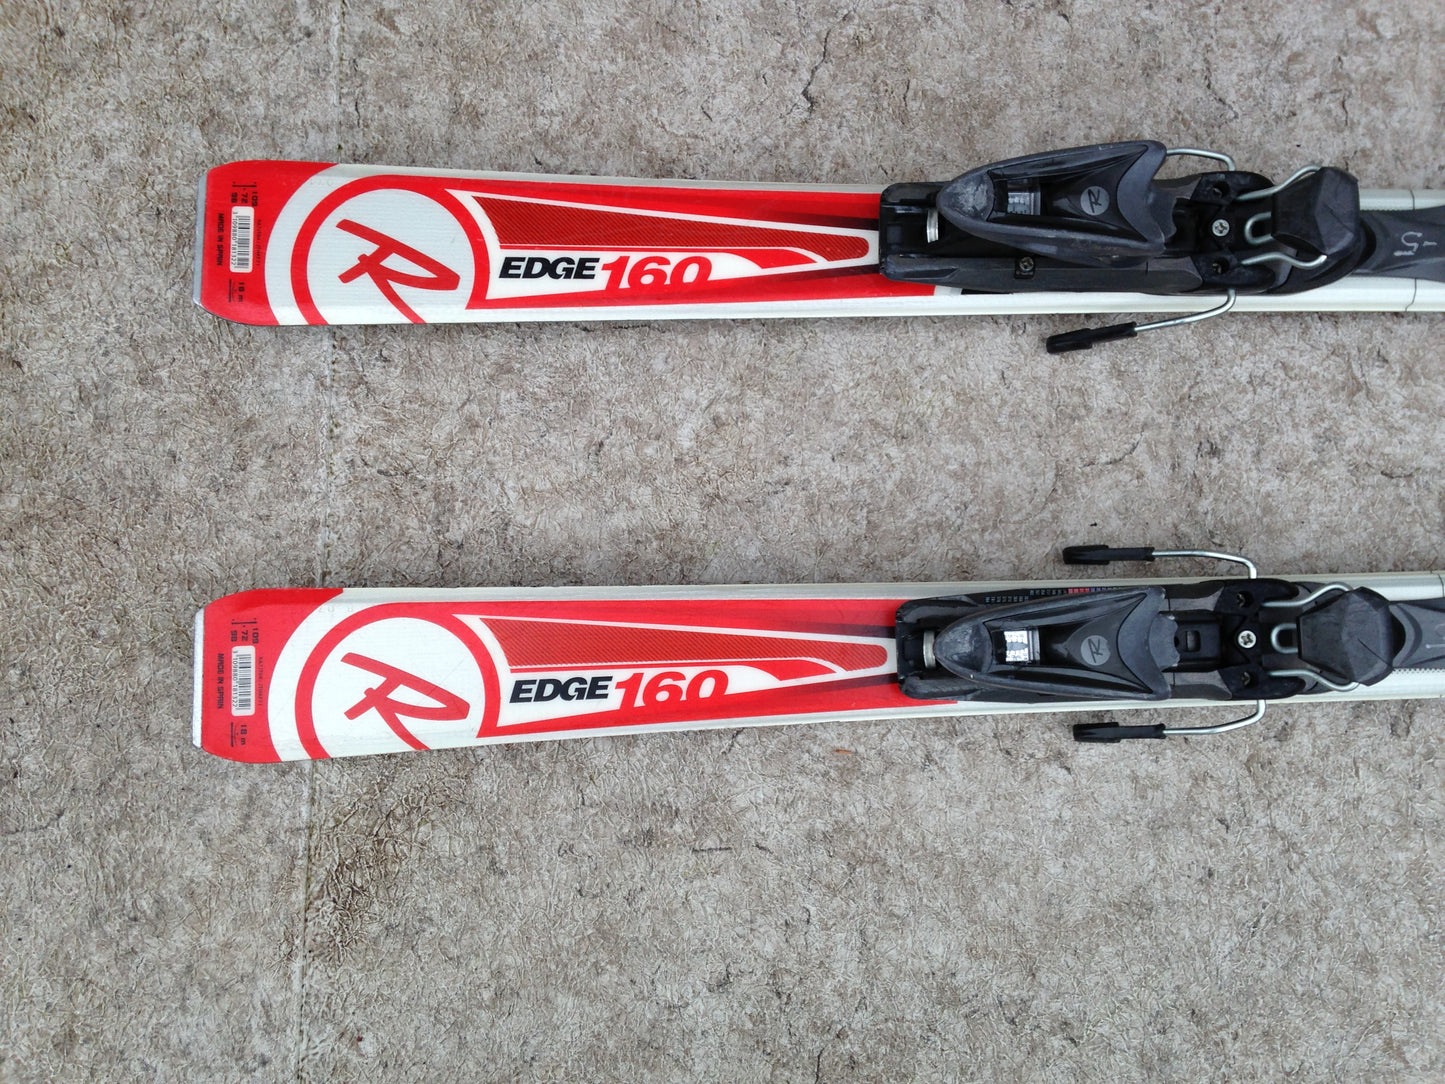 Ski 160 Rossignol Parabolic Red White With Bindings